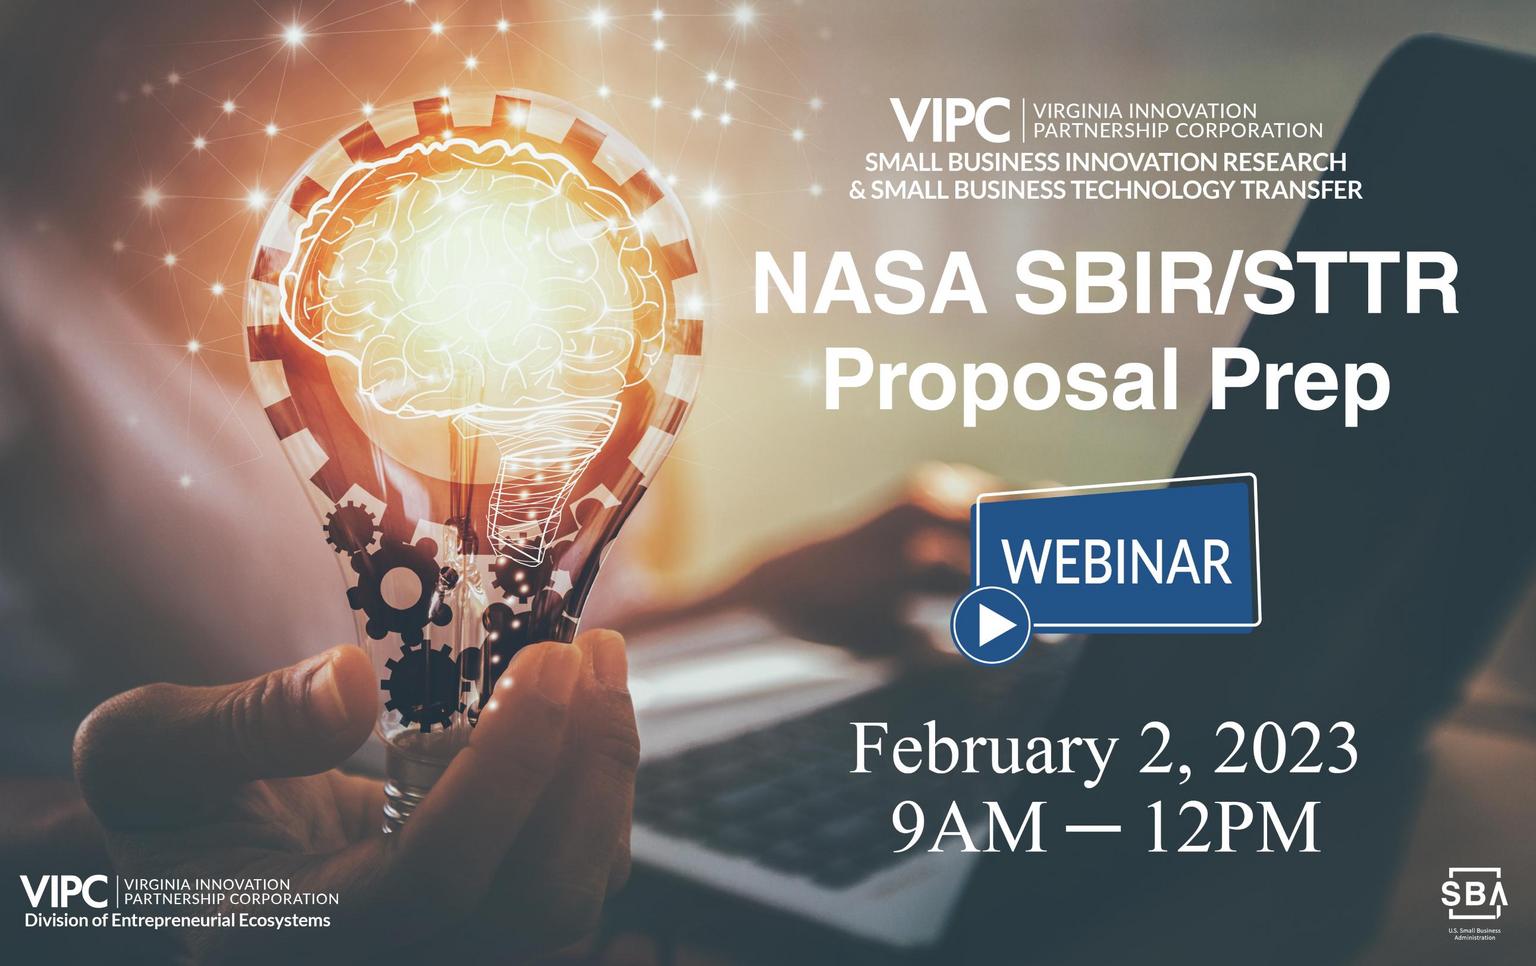 NASA SBIR/STTR Proposal Prep Webinar